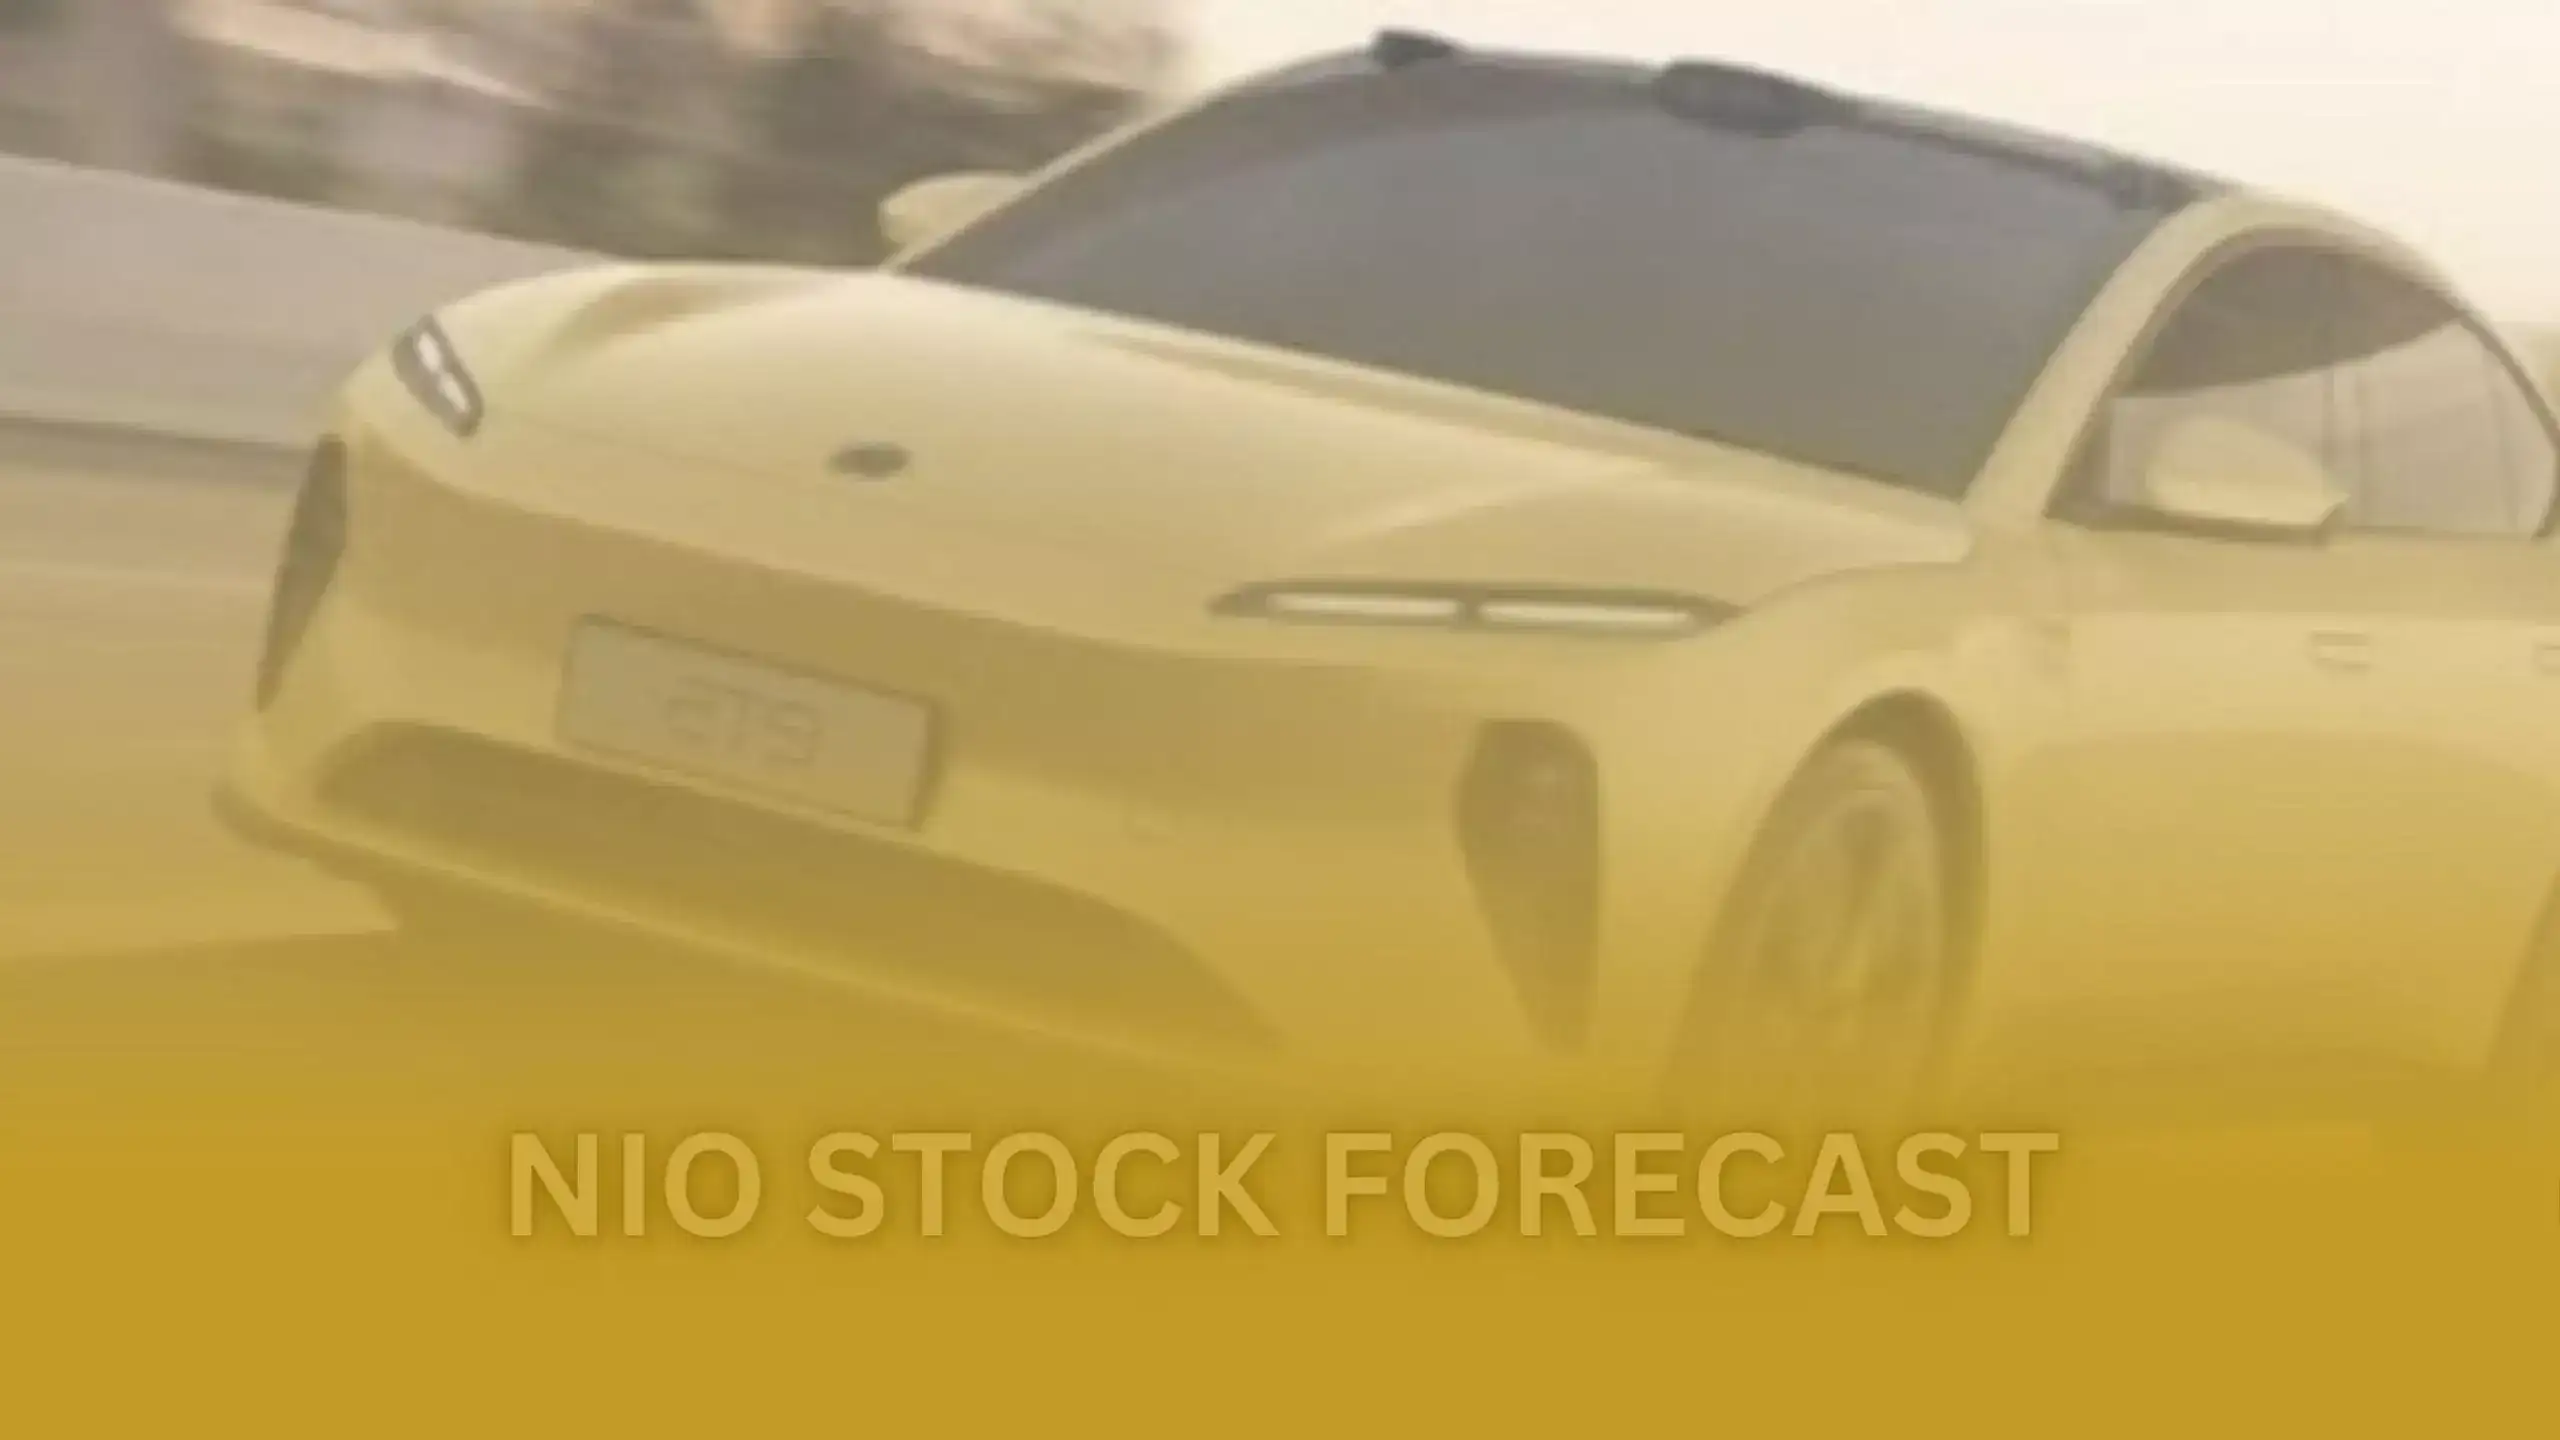 NIO Stock Forecast 2023, 2024, 2025, 2026 and 2030